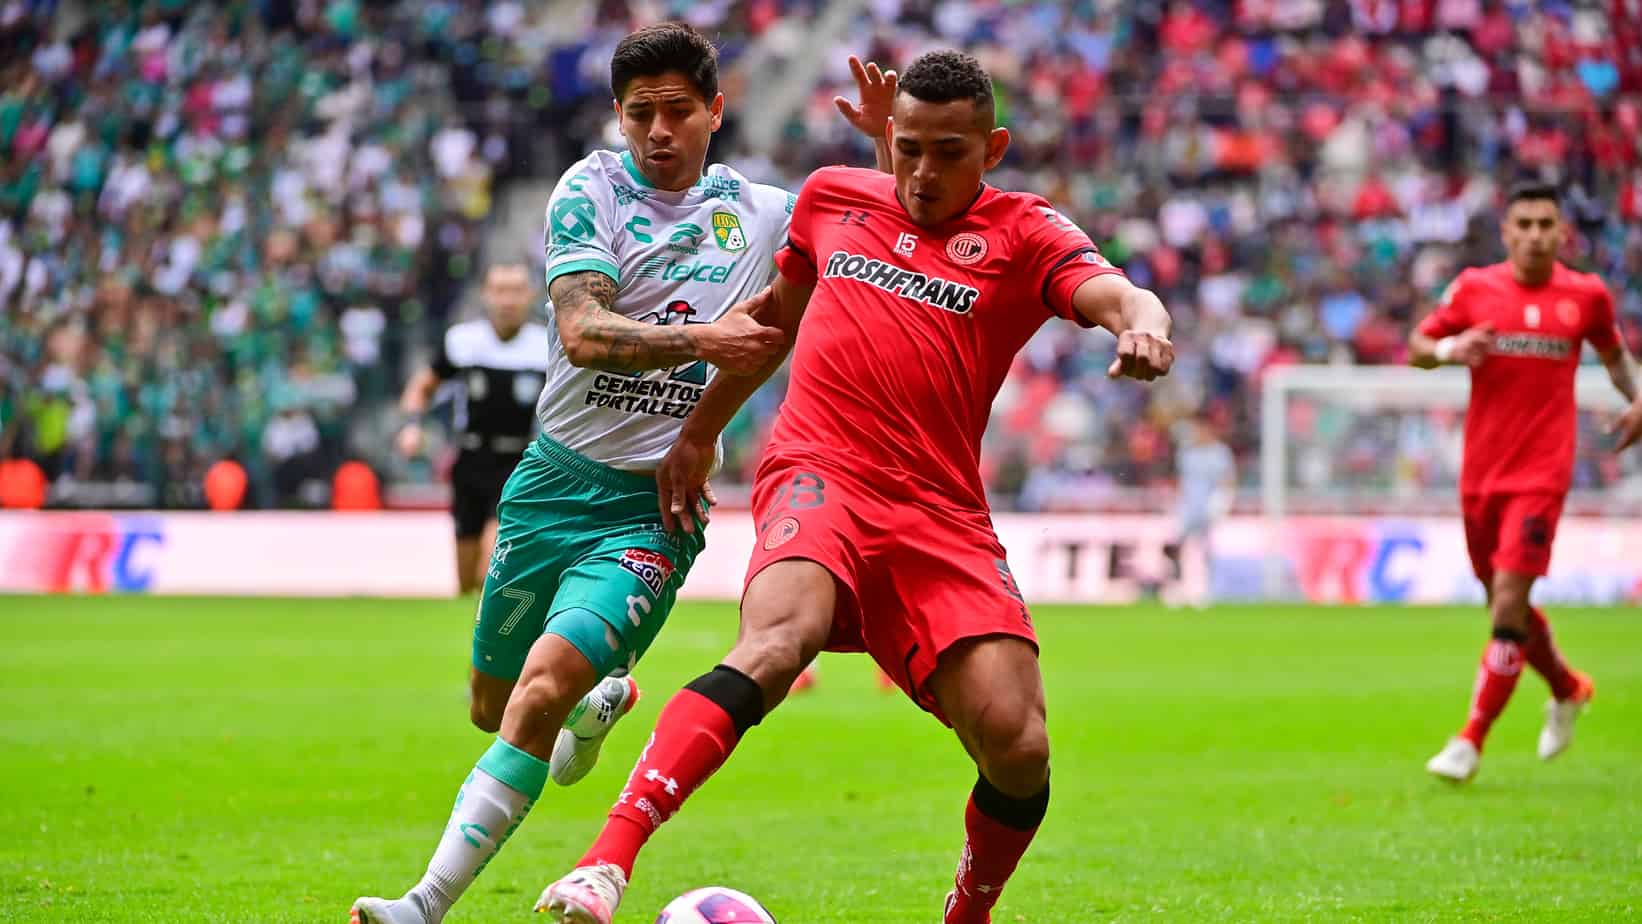 Toluca vs. León – Betting Odds and Free Pick